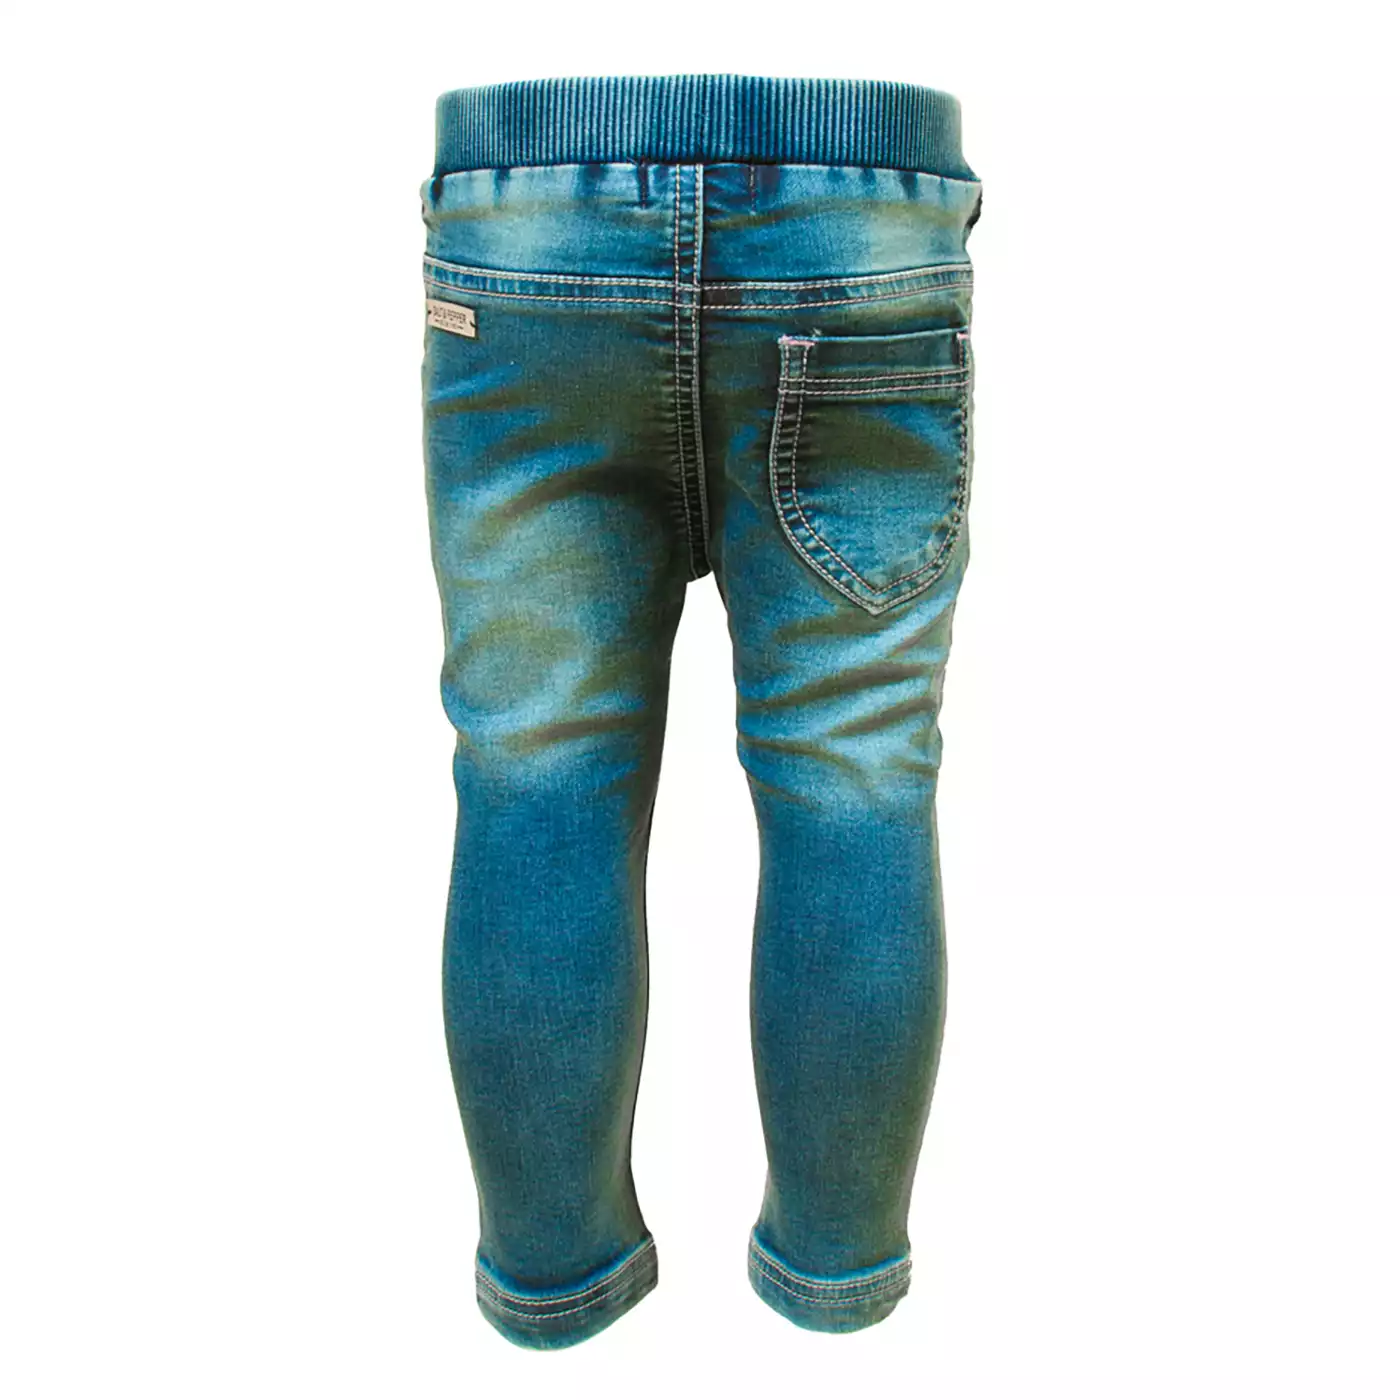 Jeans Seaside Salt & Pepper Mehrfarbig Blau M2007580190501 4